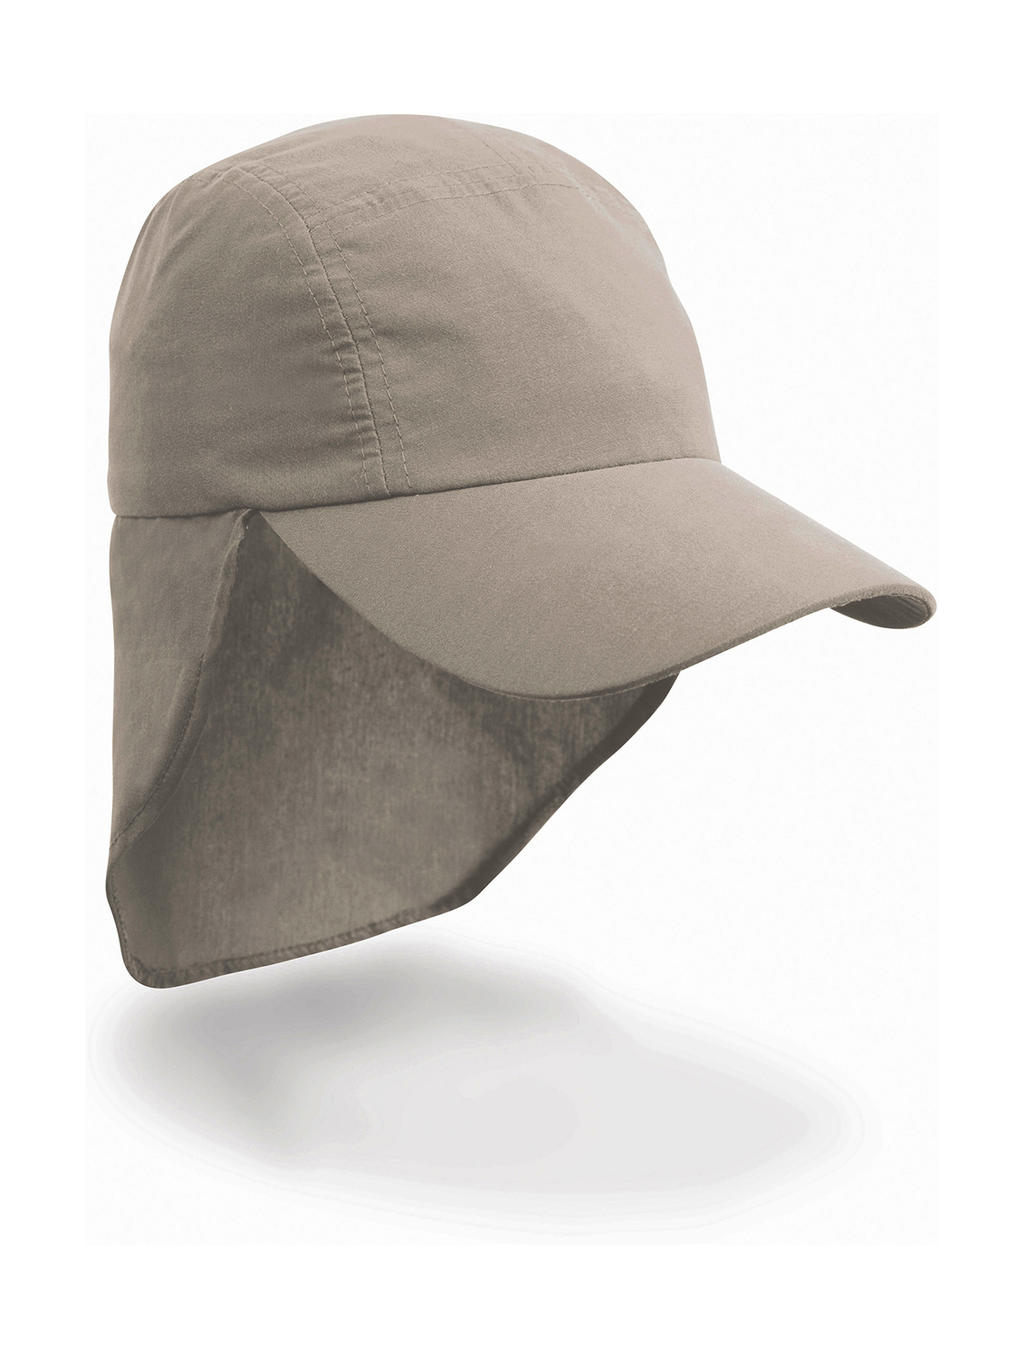  Junior Ulti Legionnaire Cap in Farbe Desert Khaki